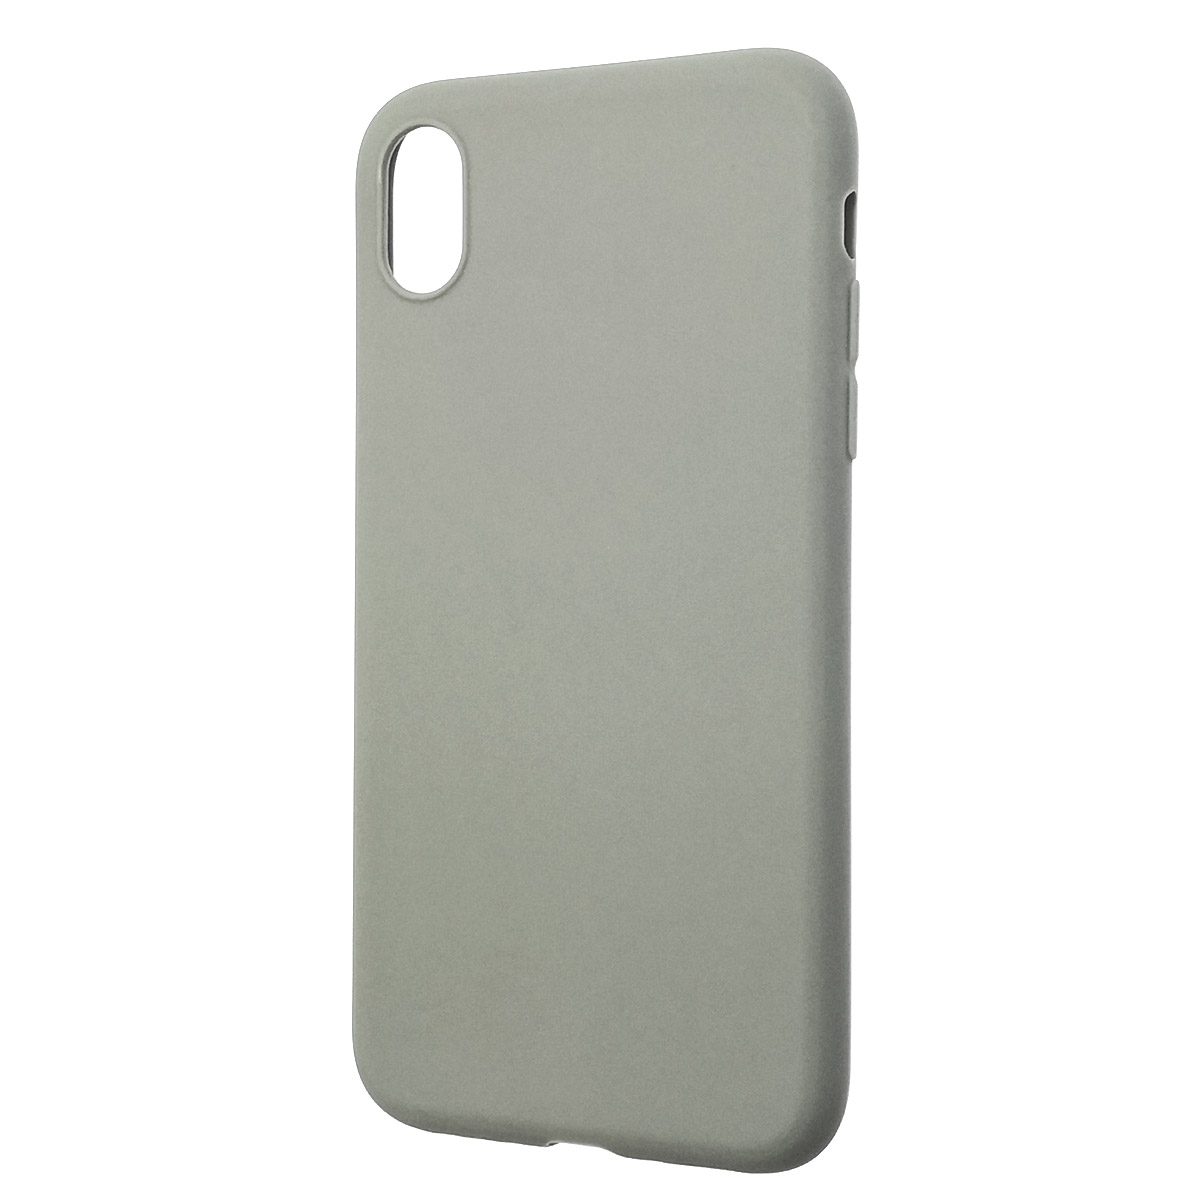 Чехол накладка GPS для APPLE iPhone XR, силикон, матовый, цвет светло серый